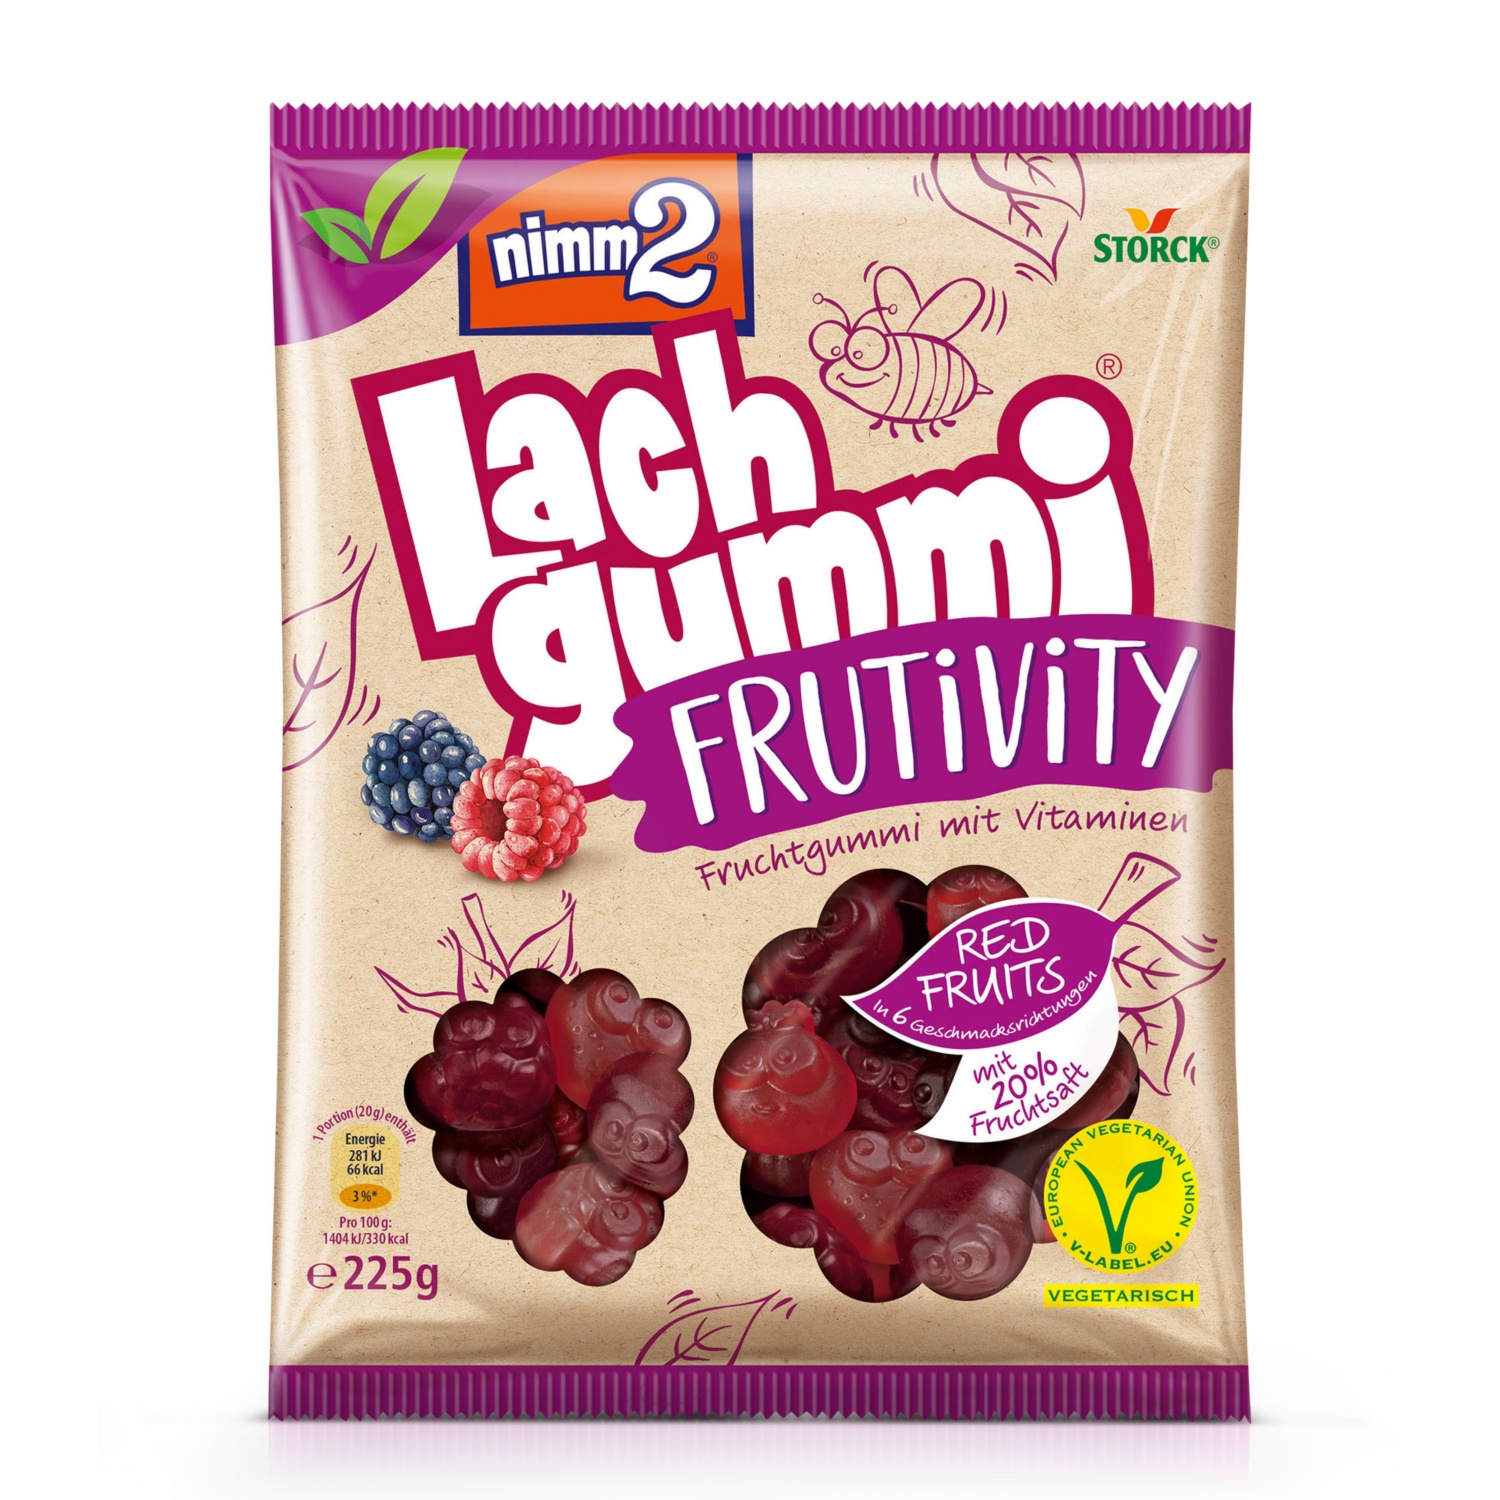 NIMM 2 Lachgummi Frutivity, Red Fruits